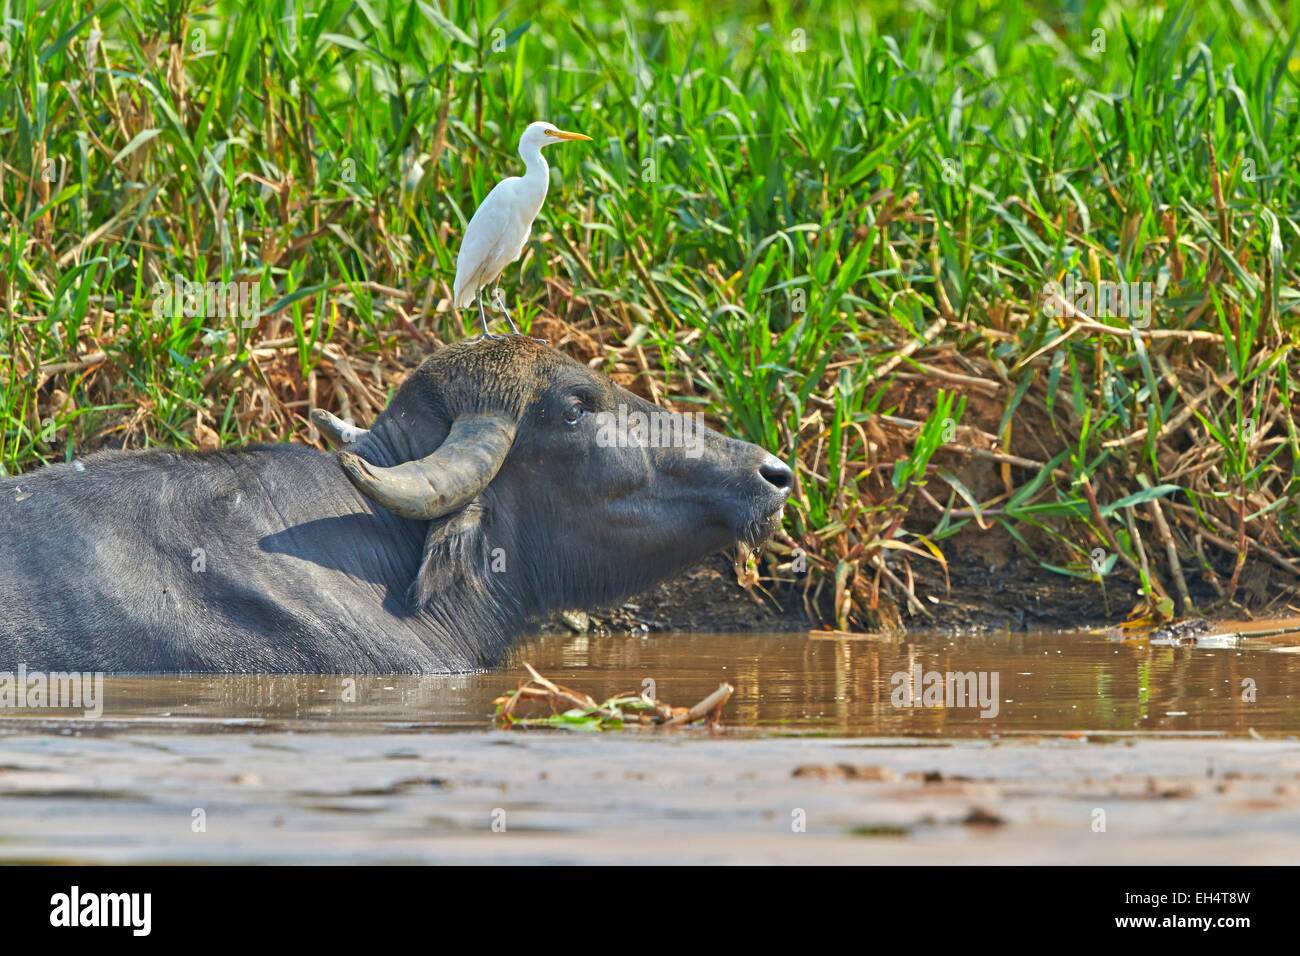 Brazil, Mato Grosso, Pantanal region, Water buffalo or Domestic Asian water buffalo (Bubalus bubalis) with a Cattle egret (Bubulcus ibis) on the back Stock Photo